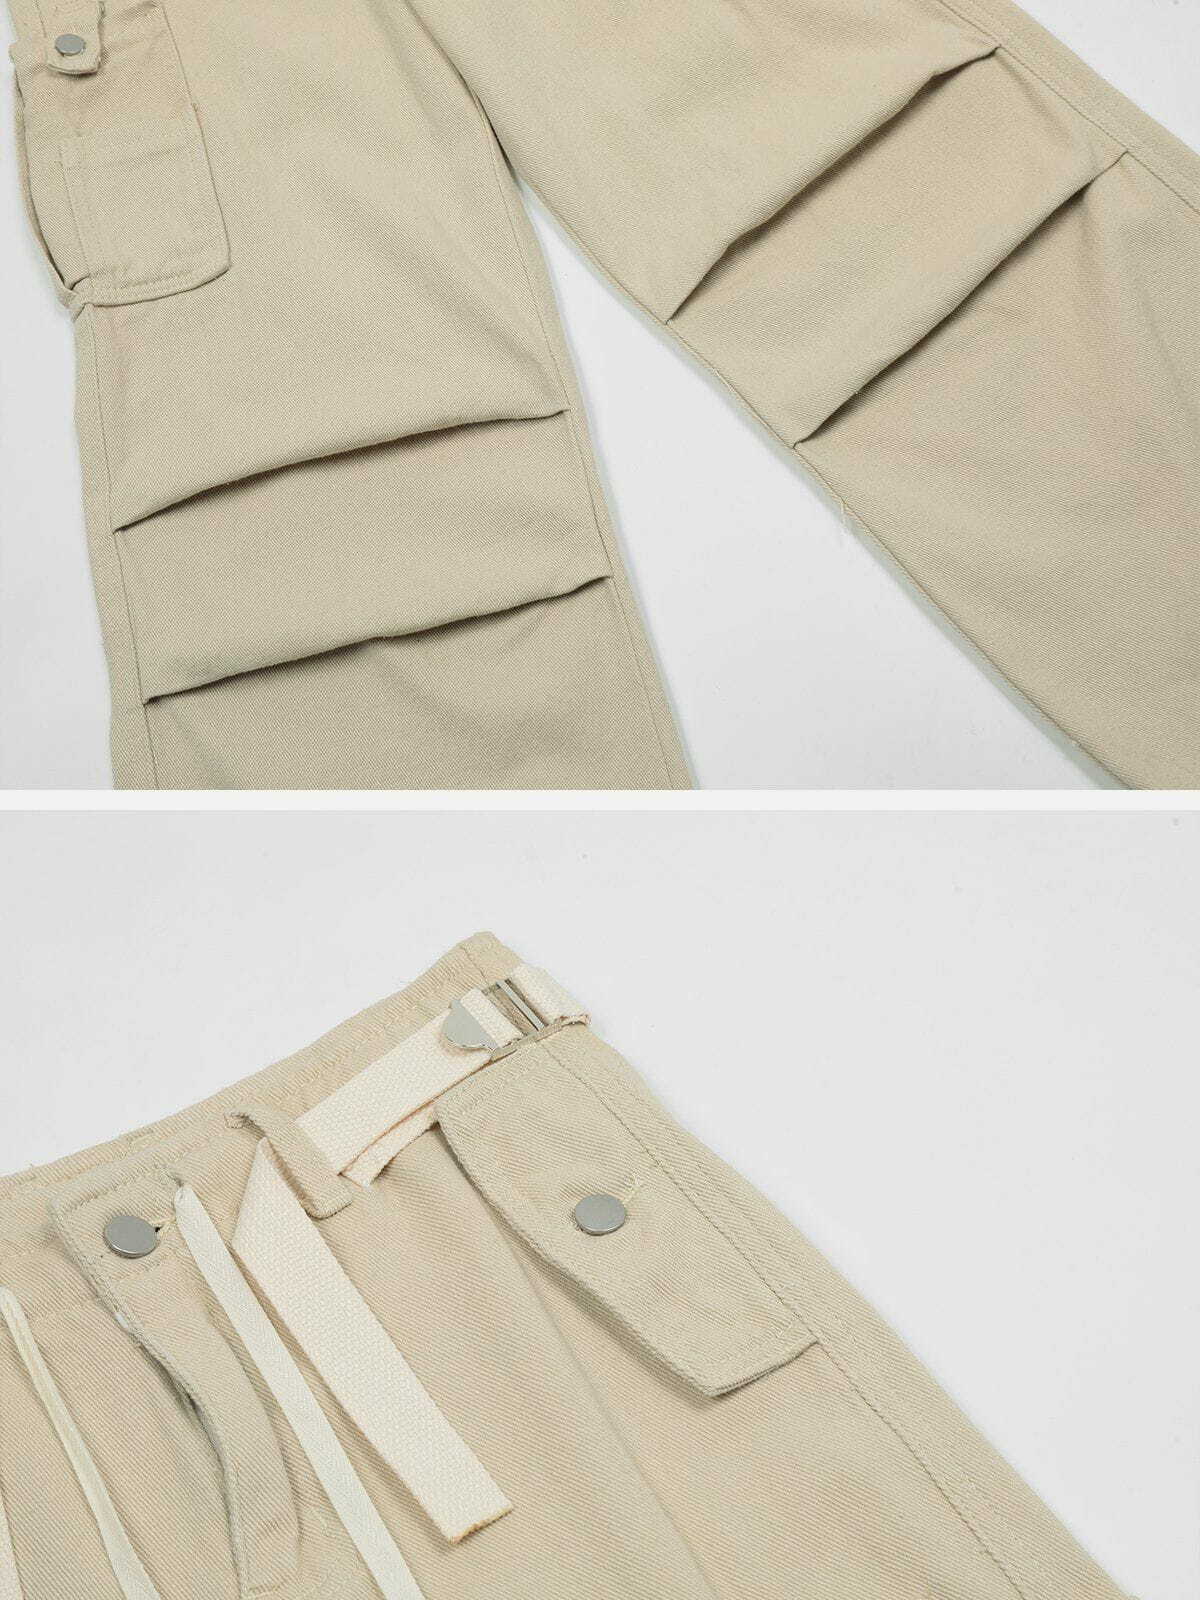 retro wideleg cargo pants edgy & functional streetwear 3827